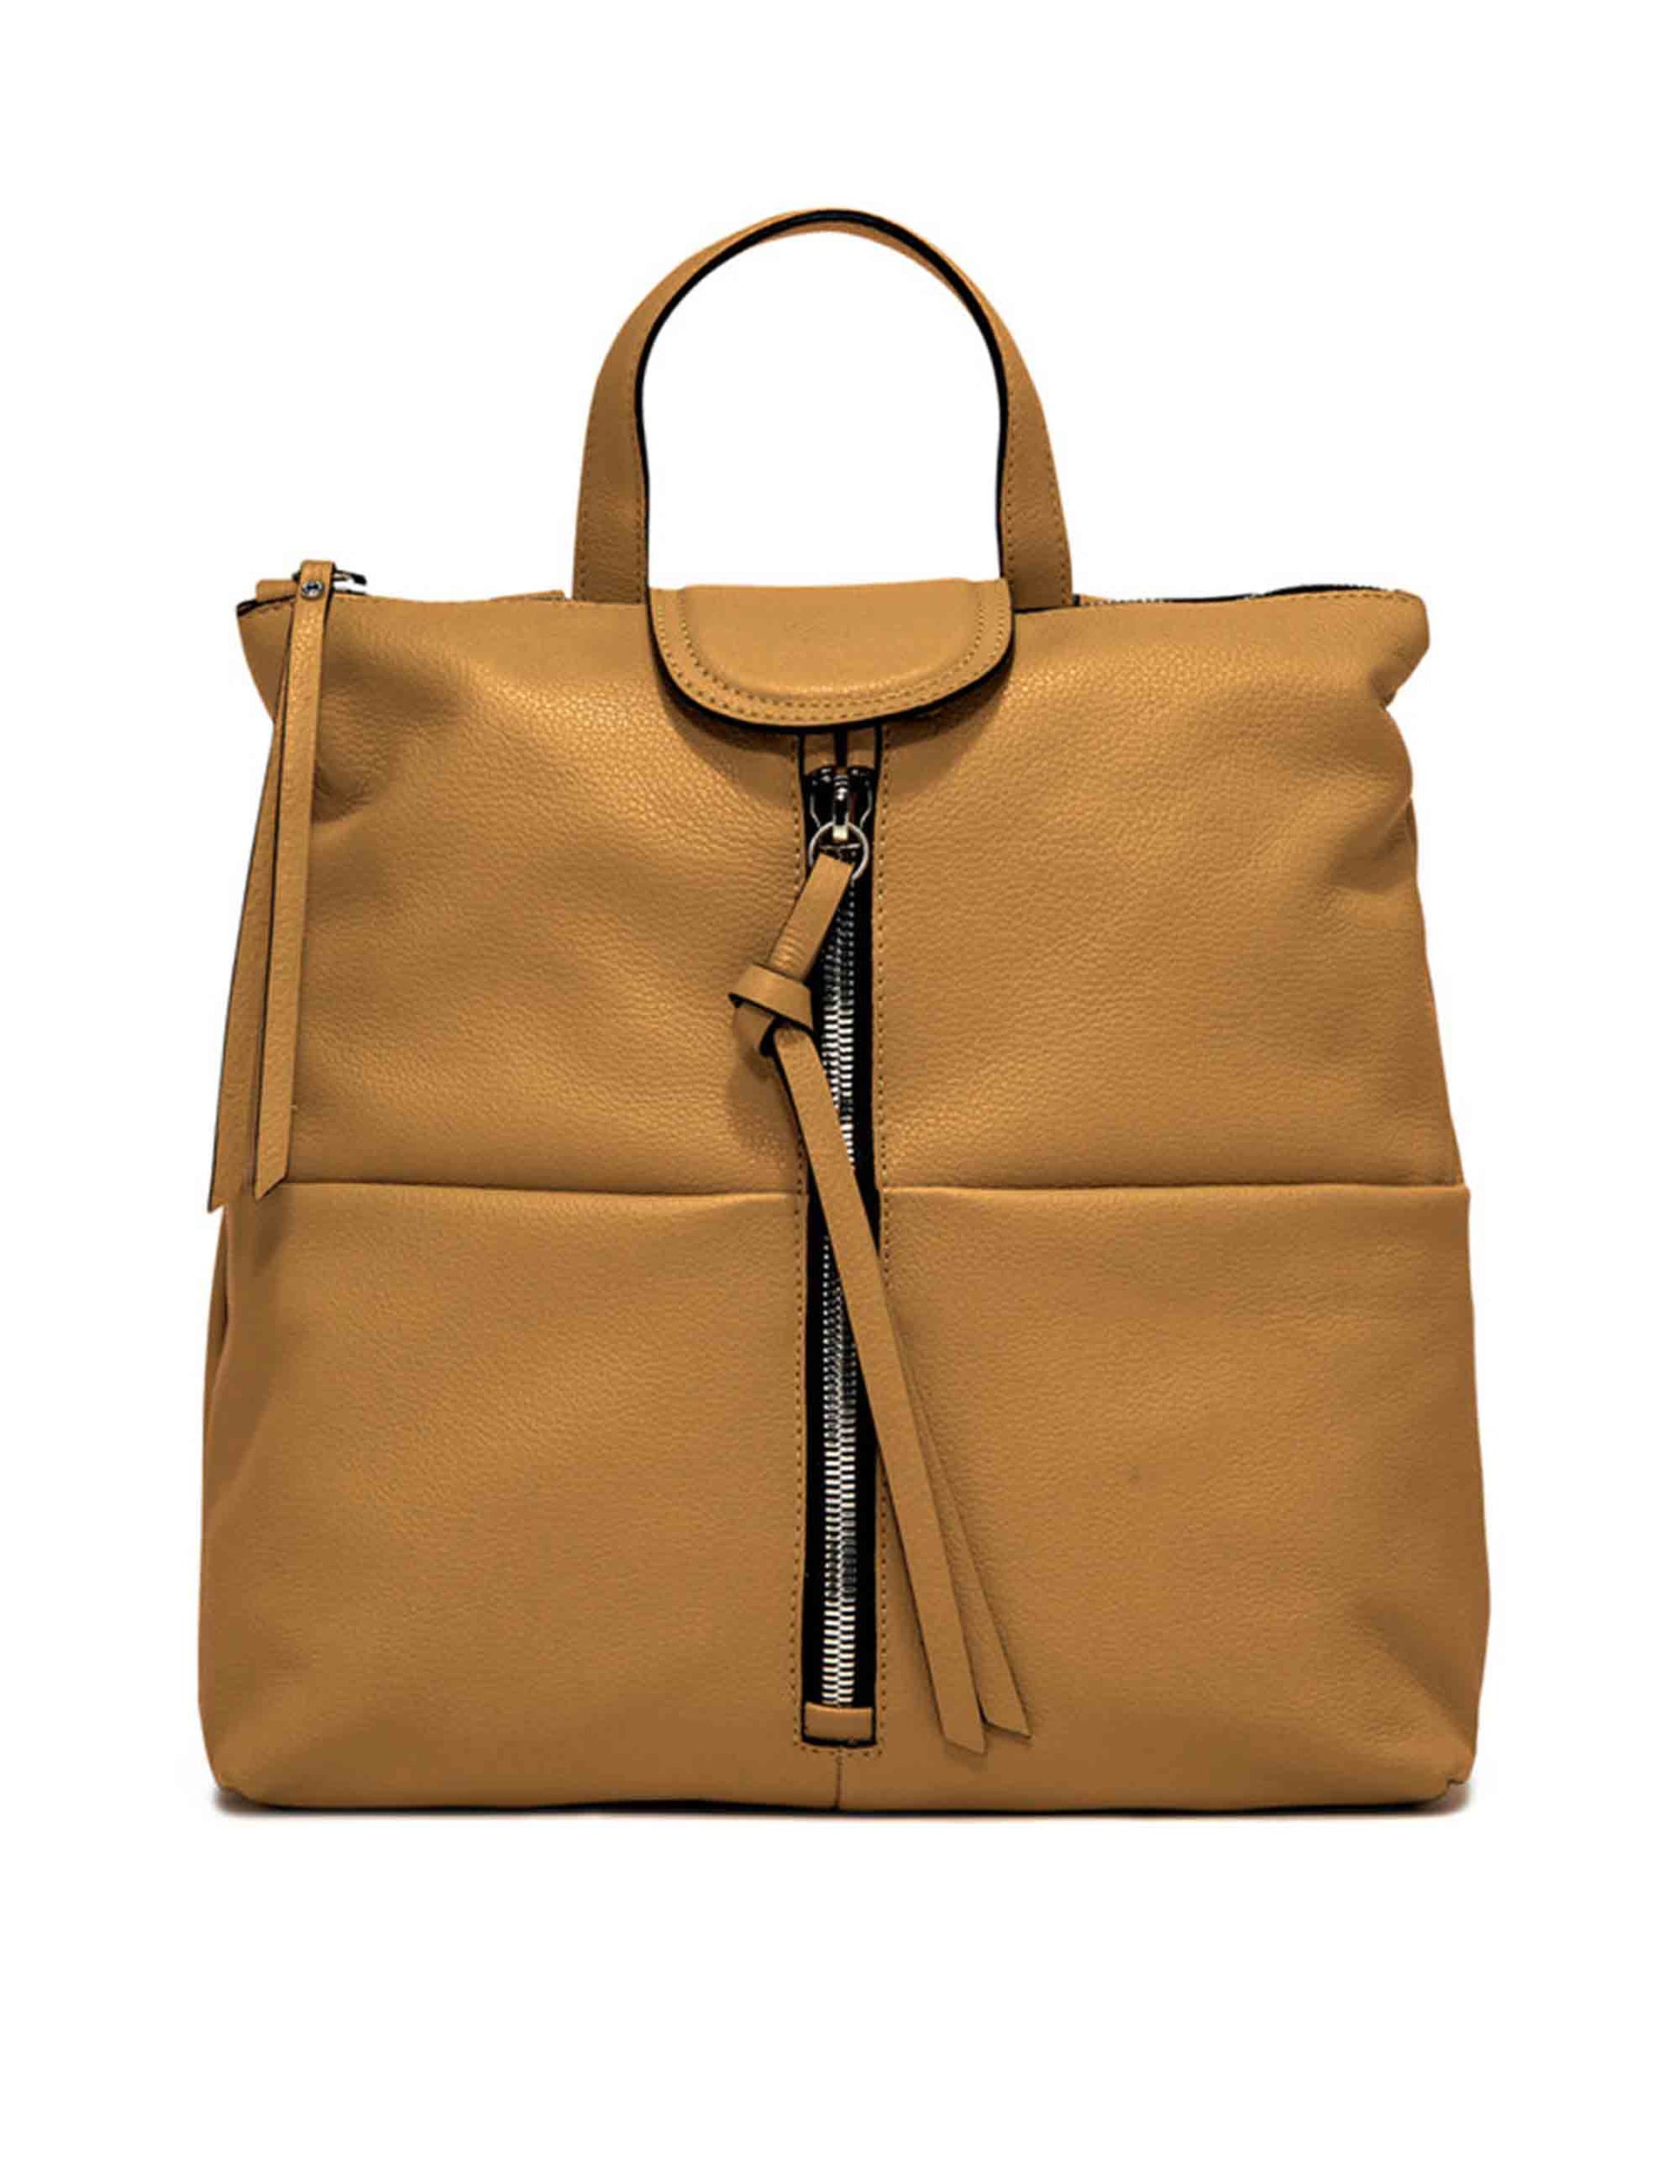 Giada women's backpacks in tan leather